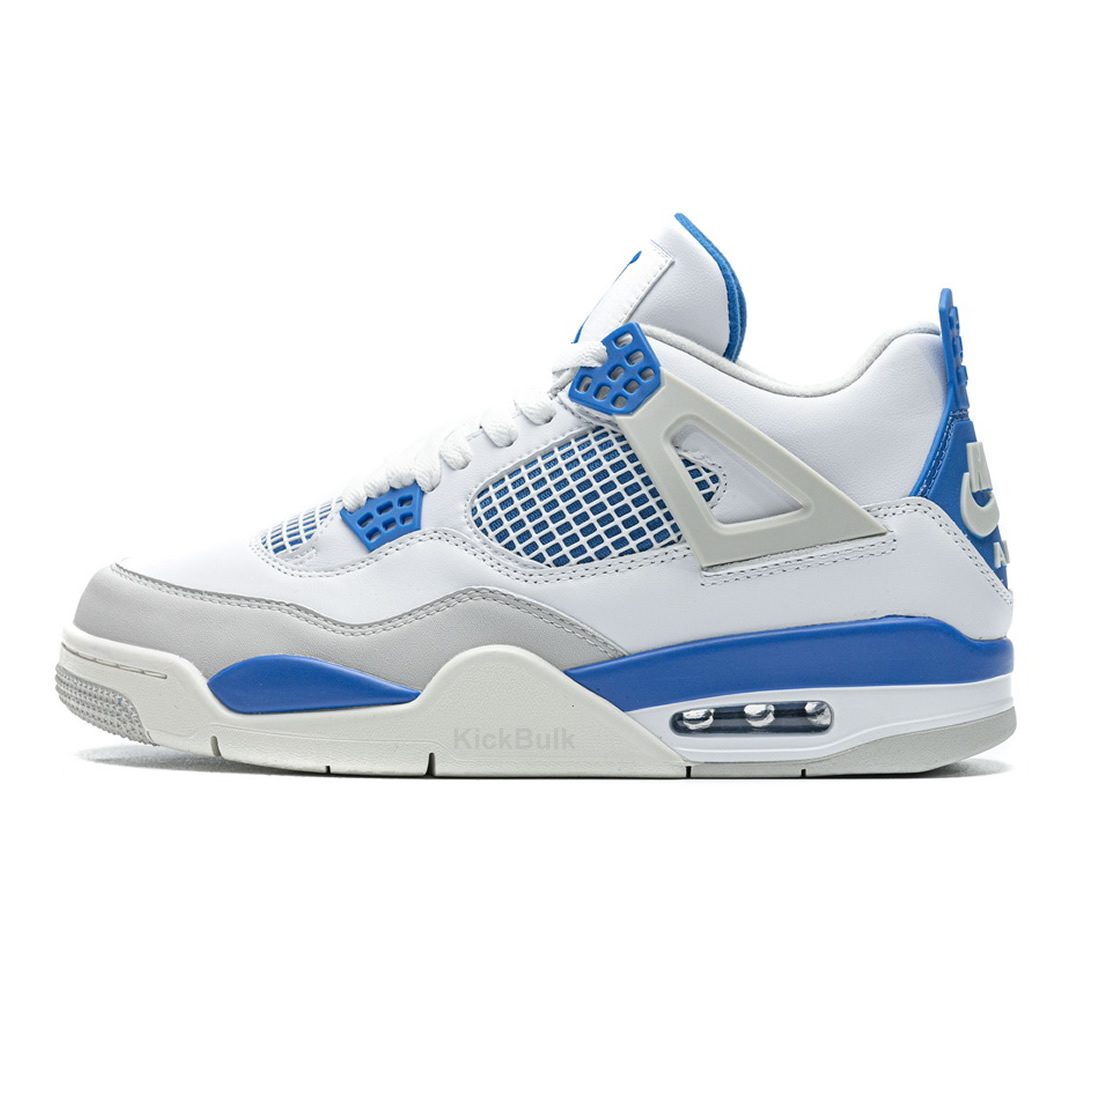 Nike Air Jordan 4 Retro Military Blue 308497 105 1 - www.kickbulk.co